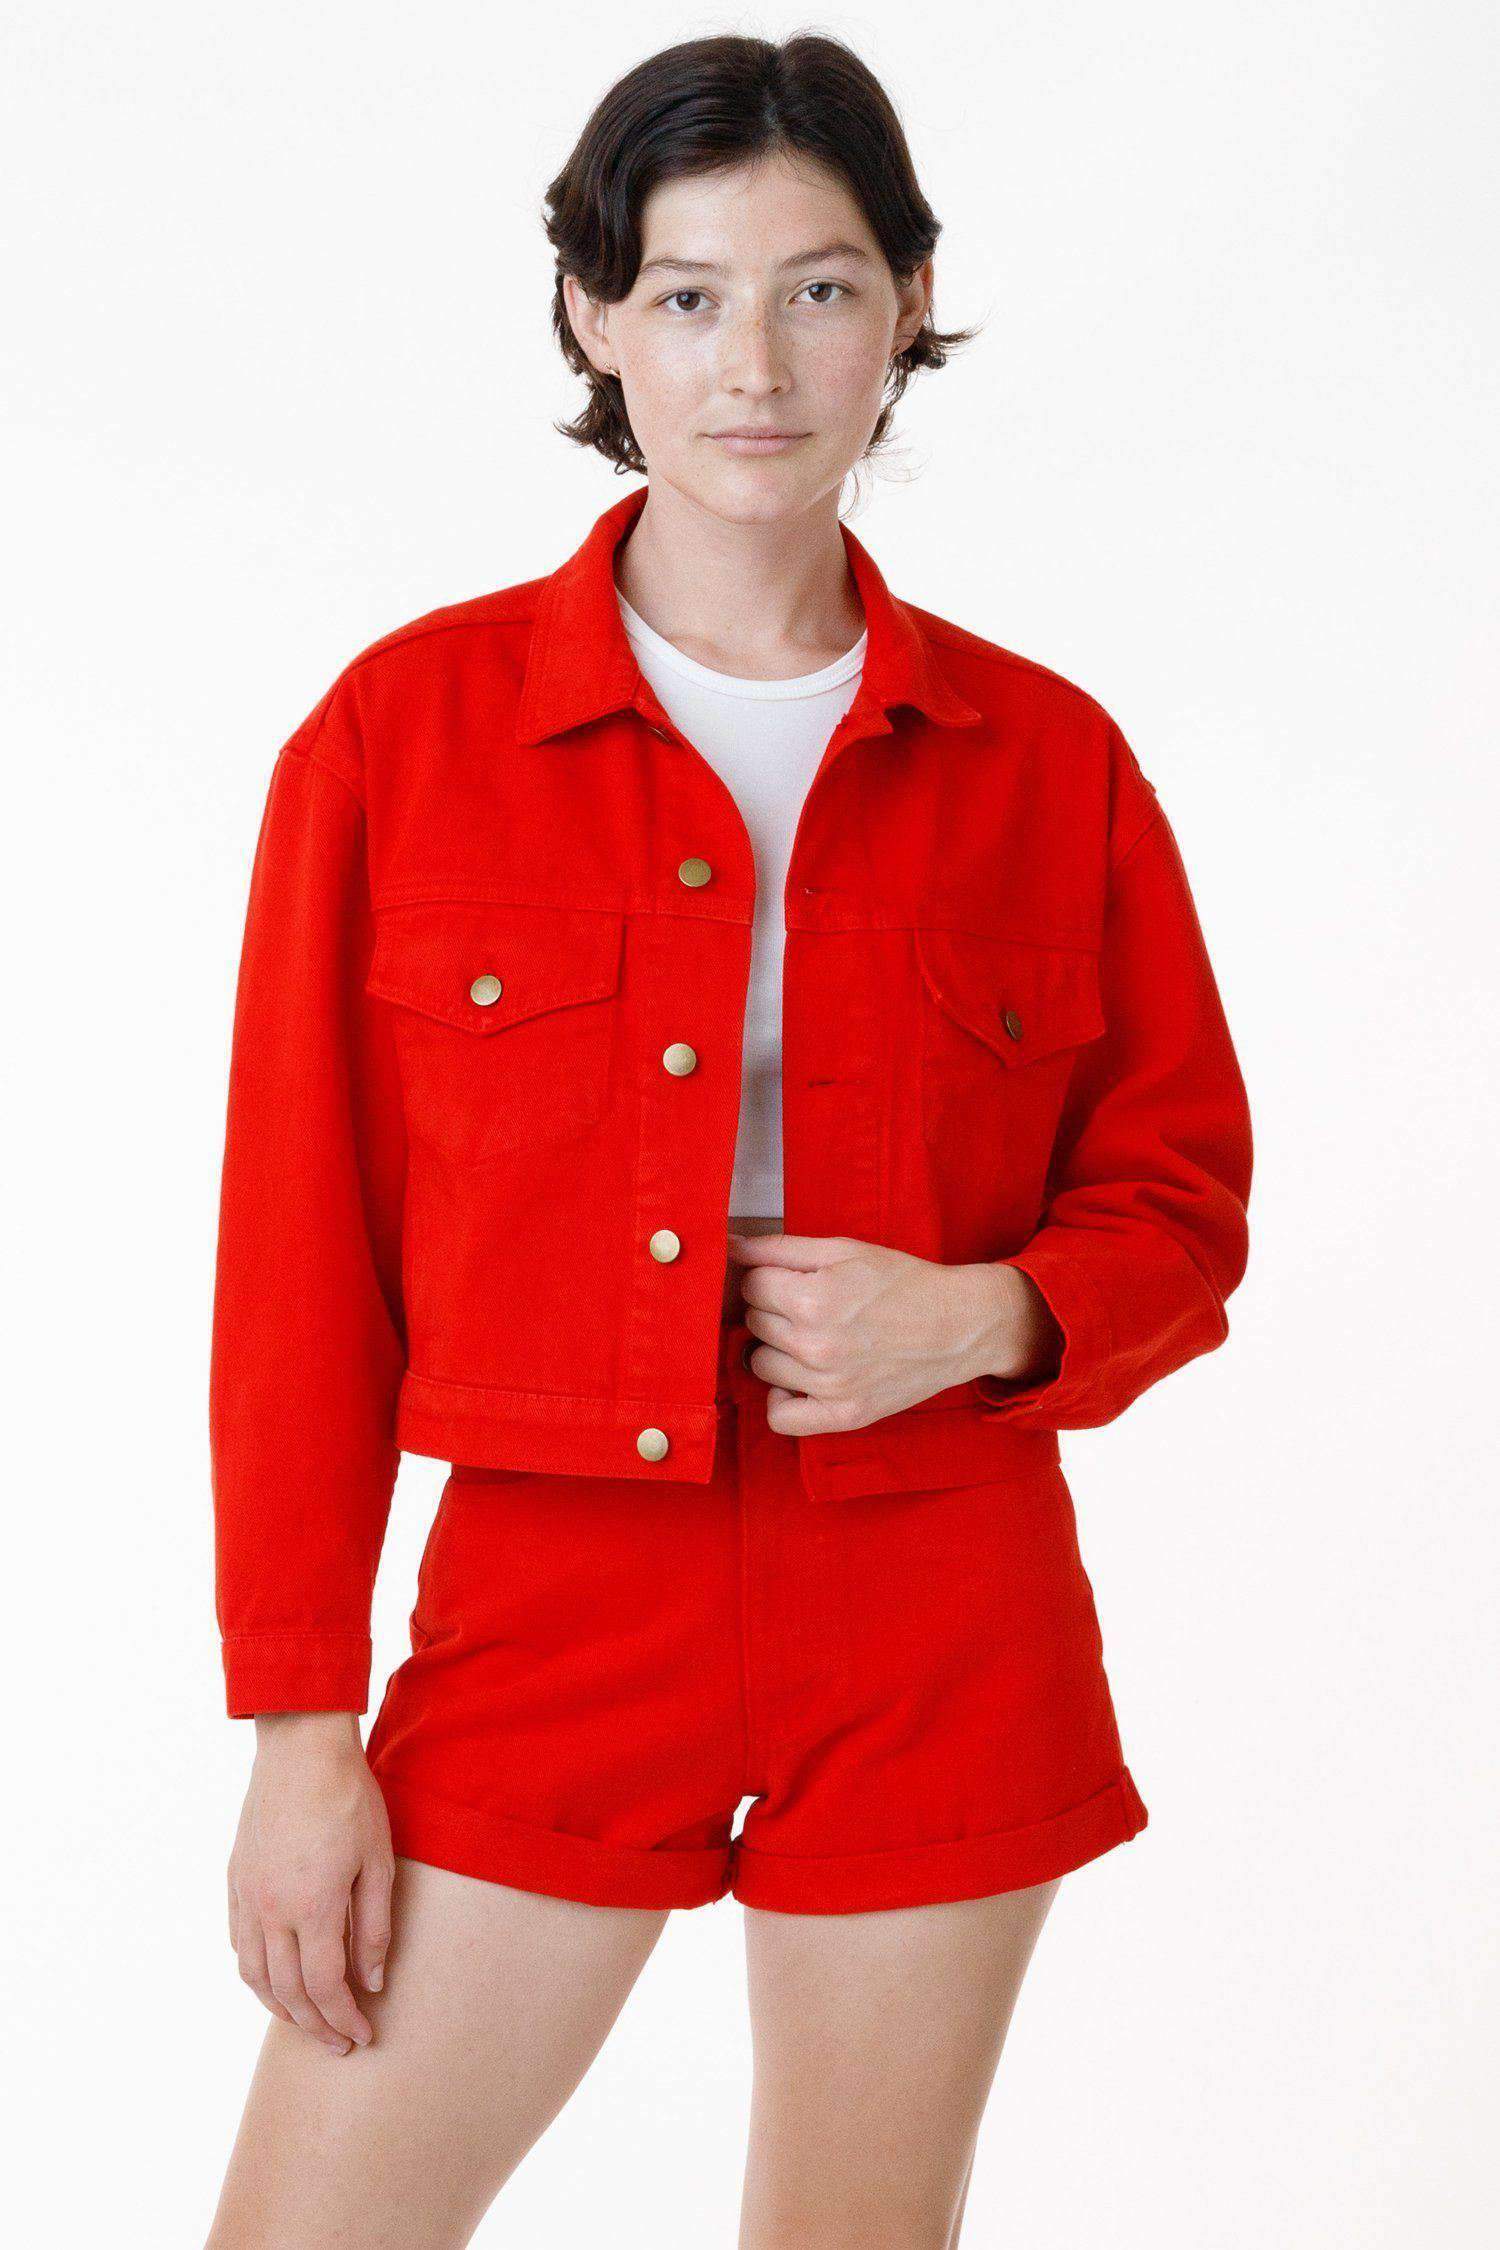 RBDW03GD - Garment Dye Cropped Bull Denim Jacket (Limited Edition) Jacket Los Angeles Apparel Flamma Red XS 